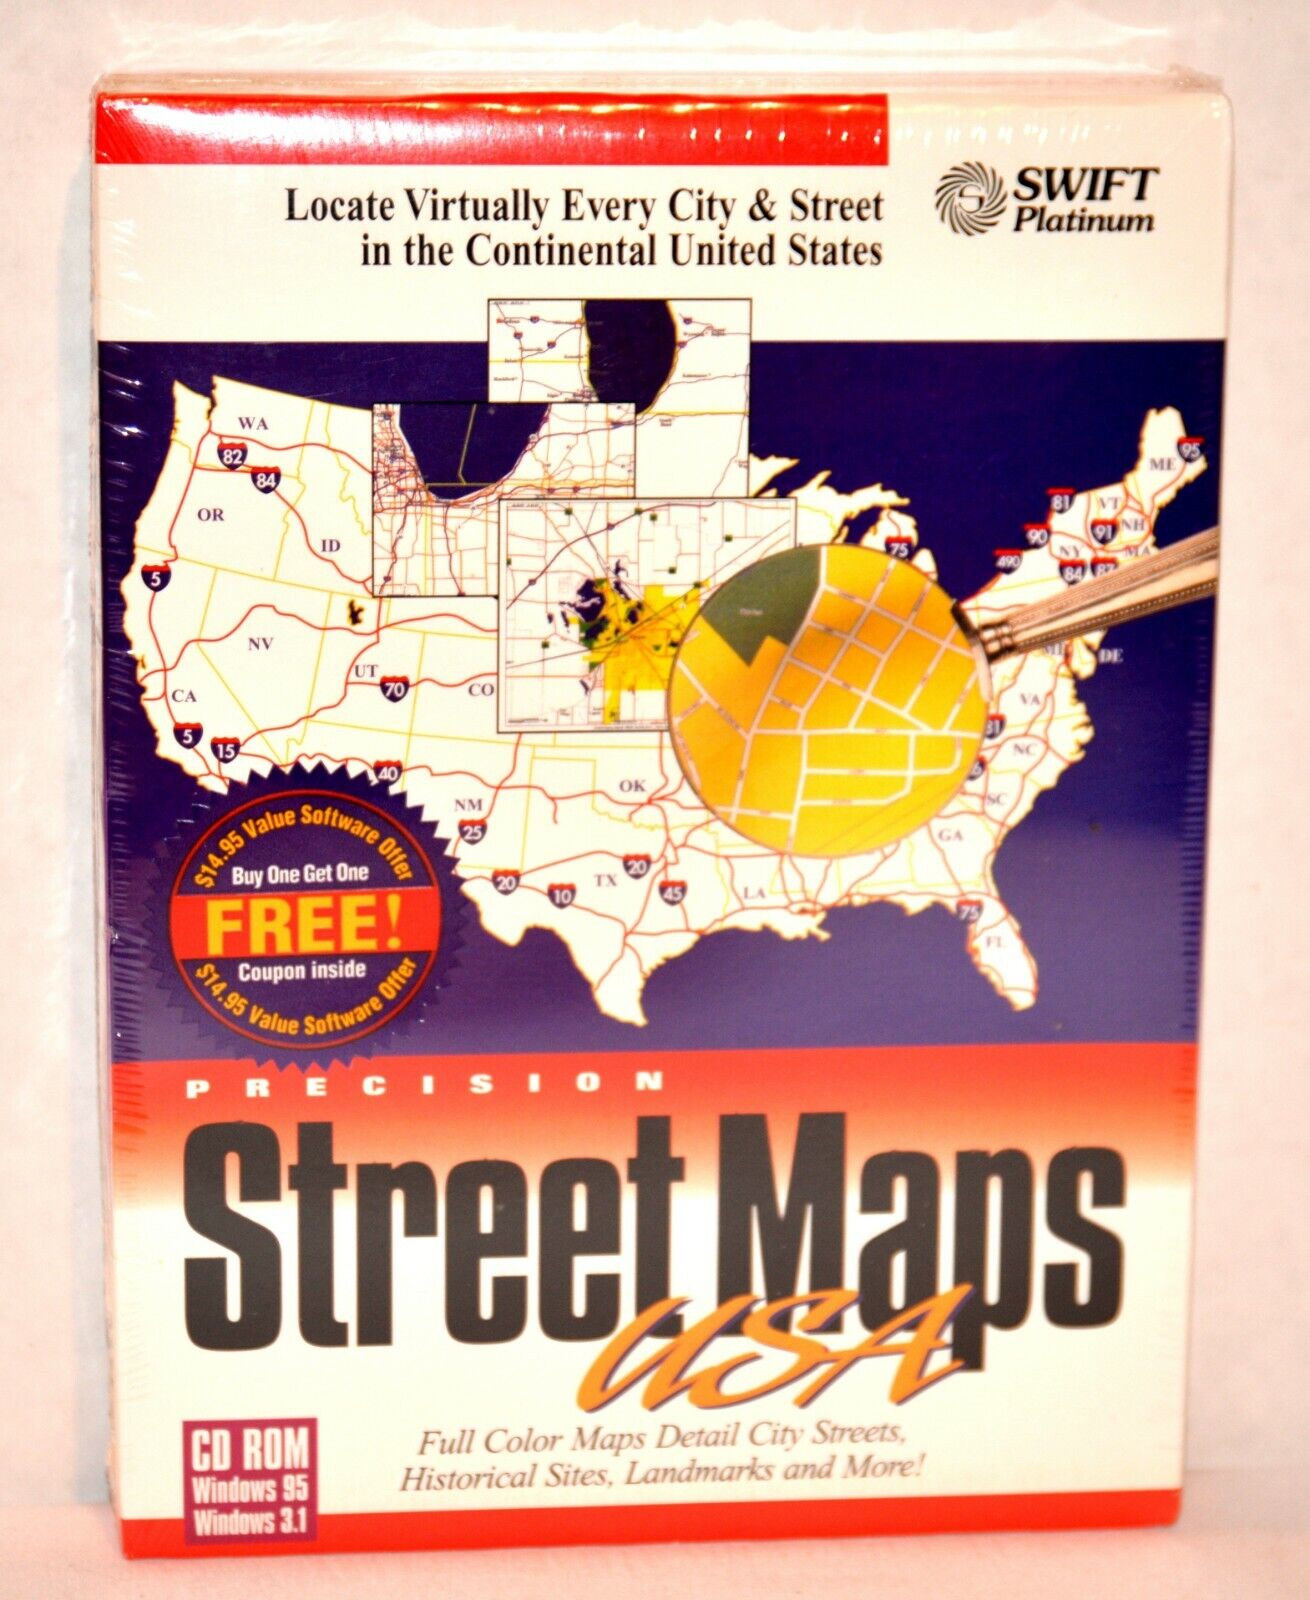 Swift Platinum - Precision Street Maps USA - Windows PC - 1997 -New/ Sealed